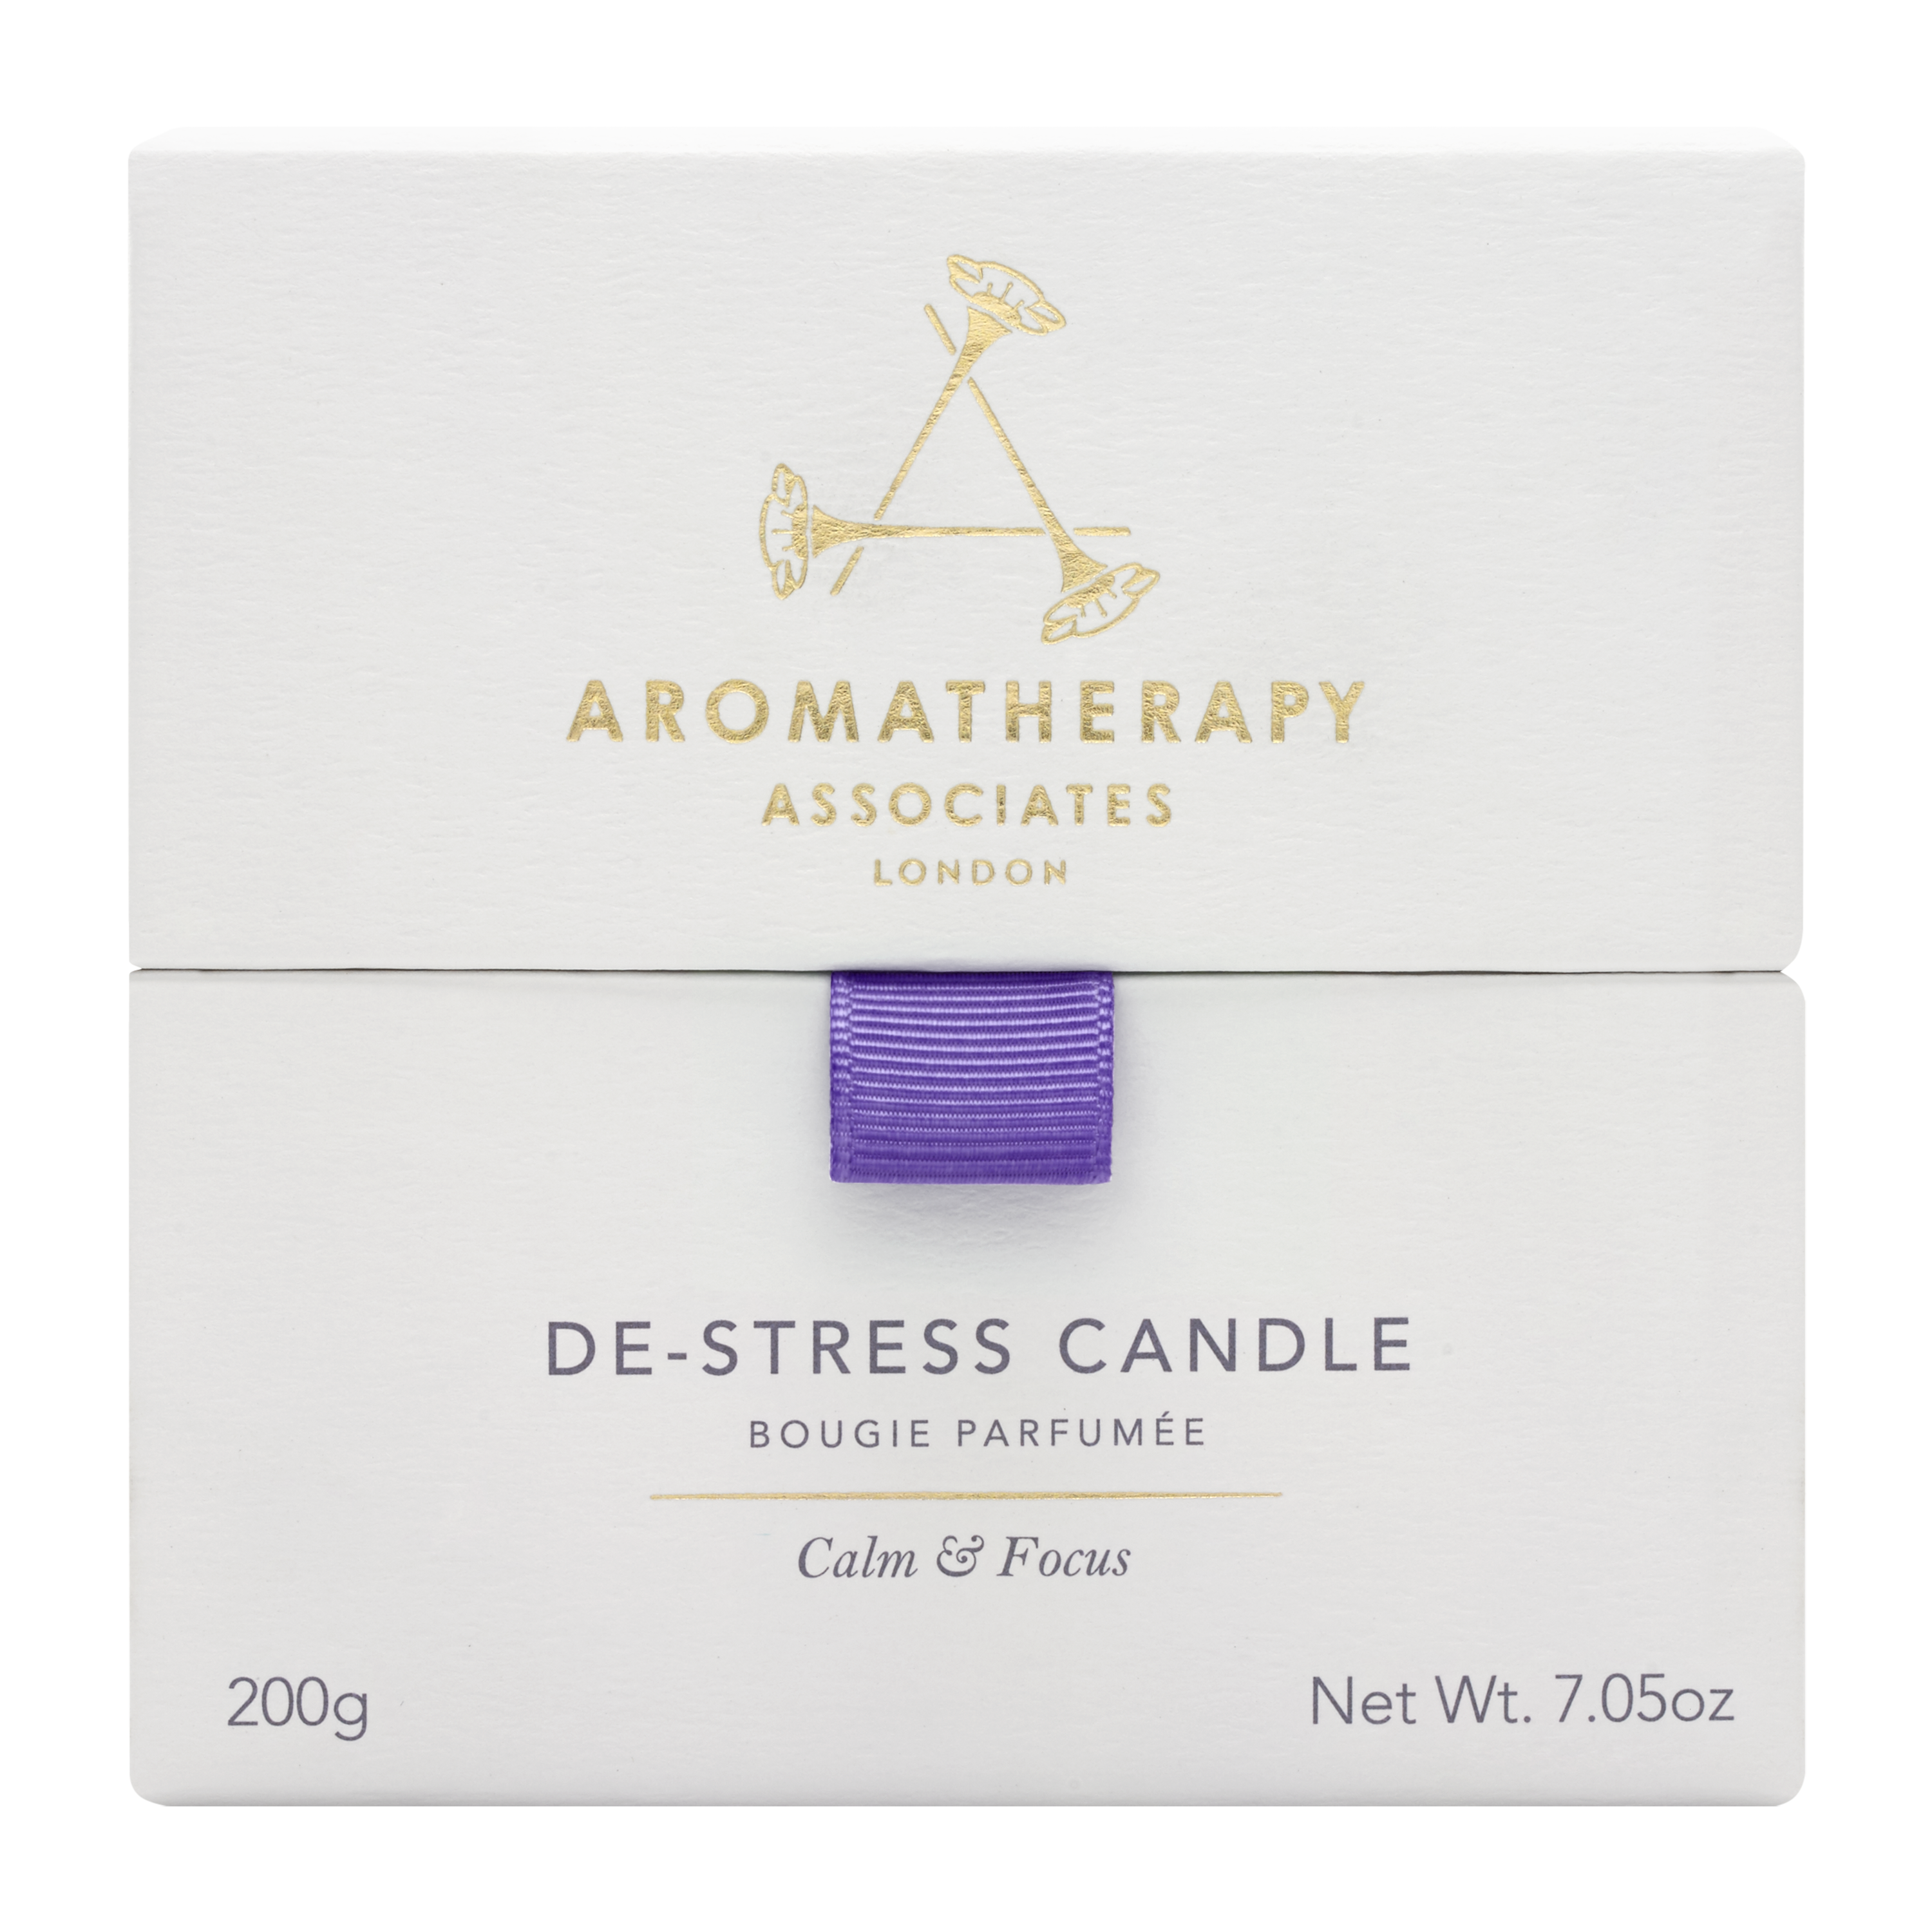 De-Stress Candle 200g Aromatherapy Associates